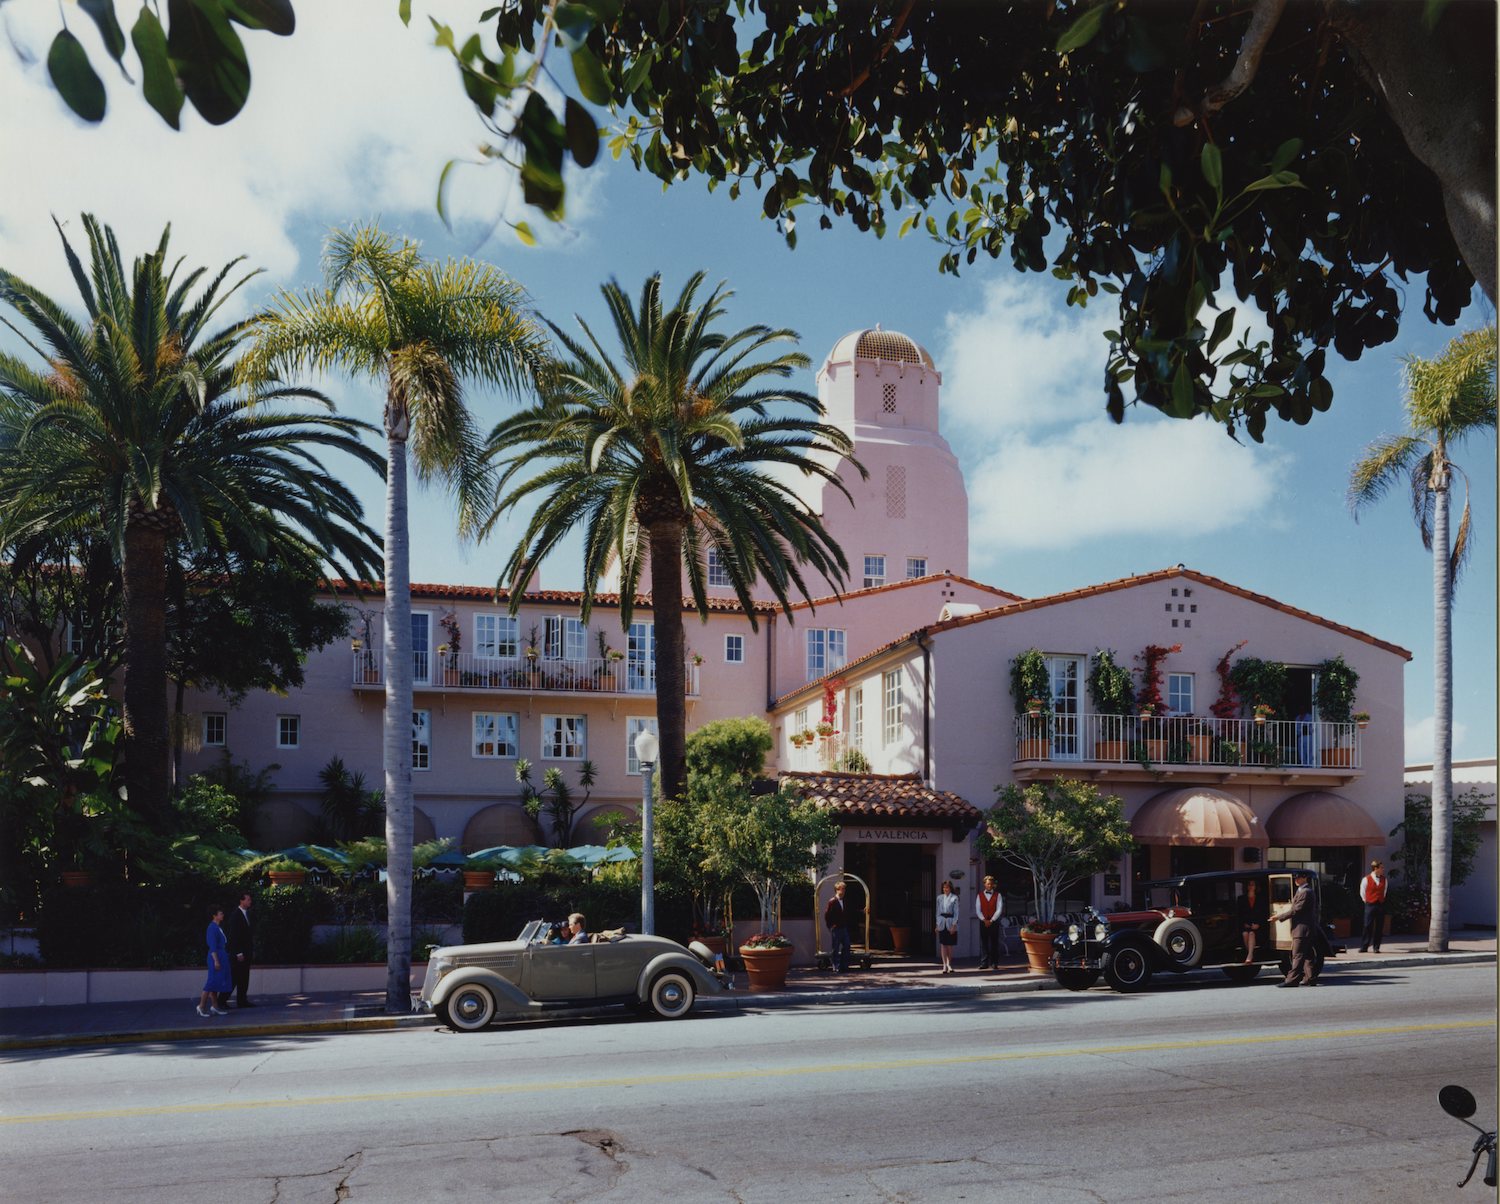 Exterior of La Valencia Hotel and Shops located in La Jolla, San Diego